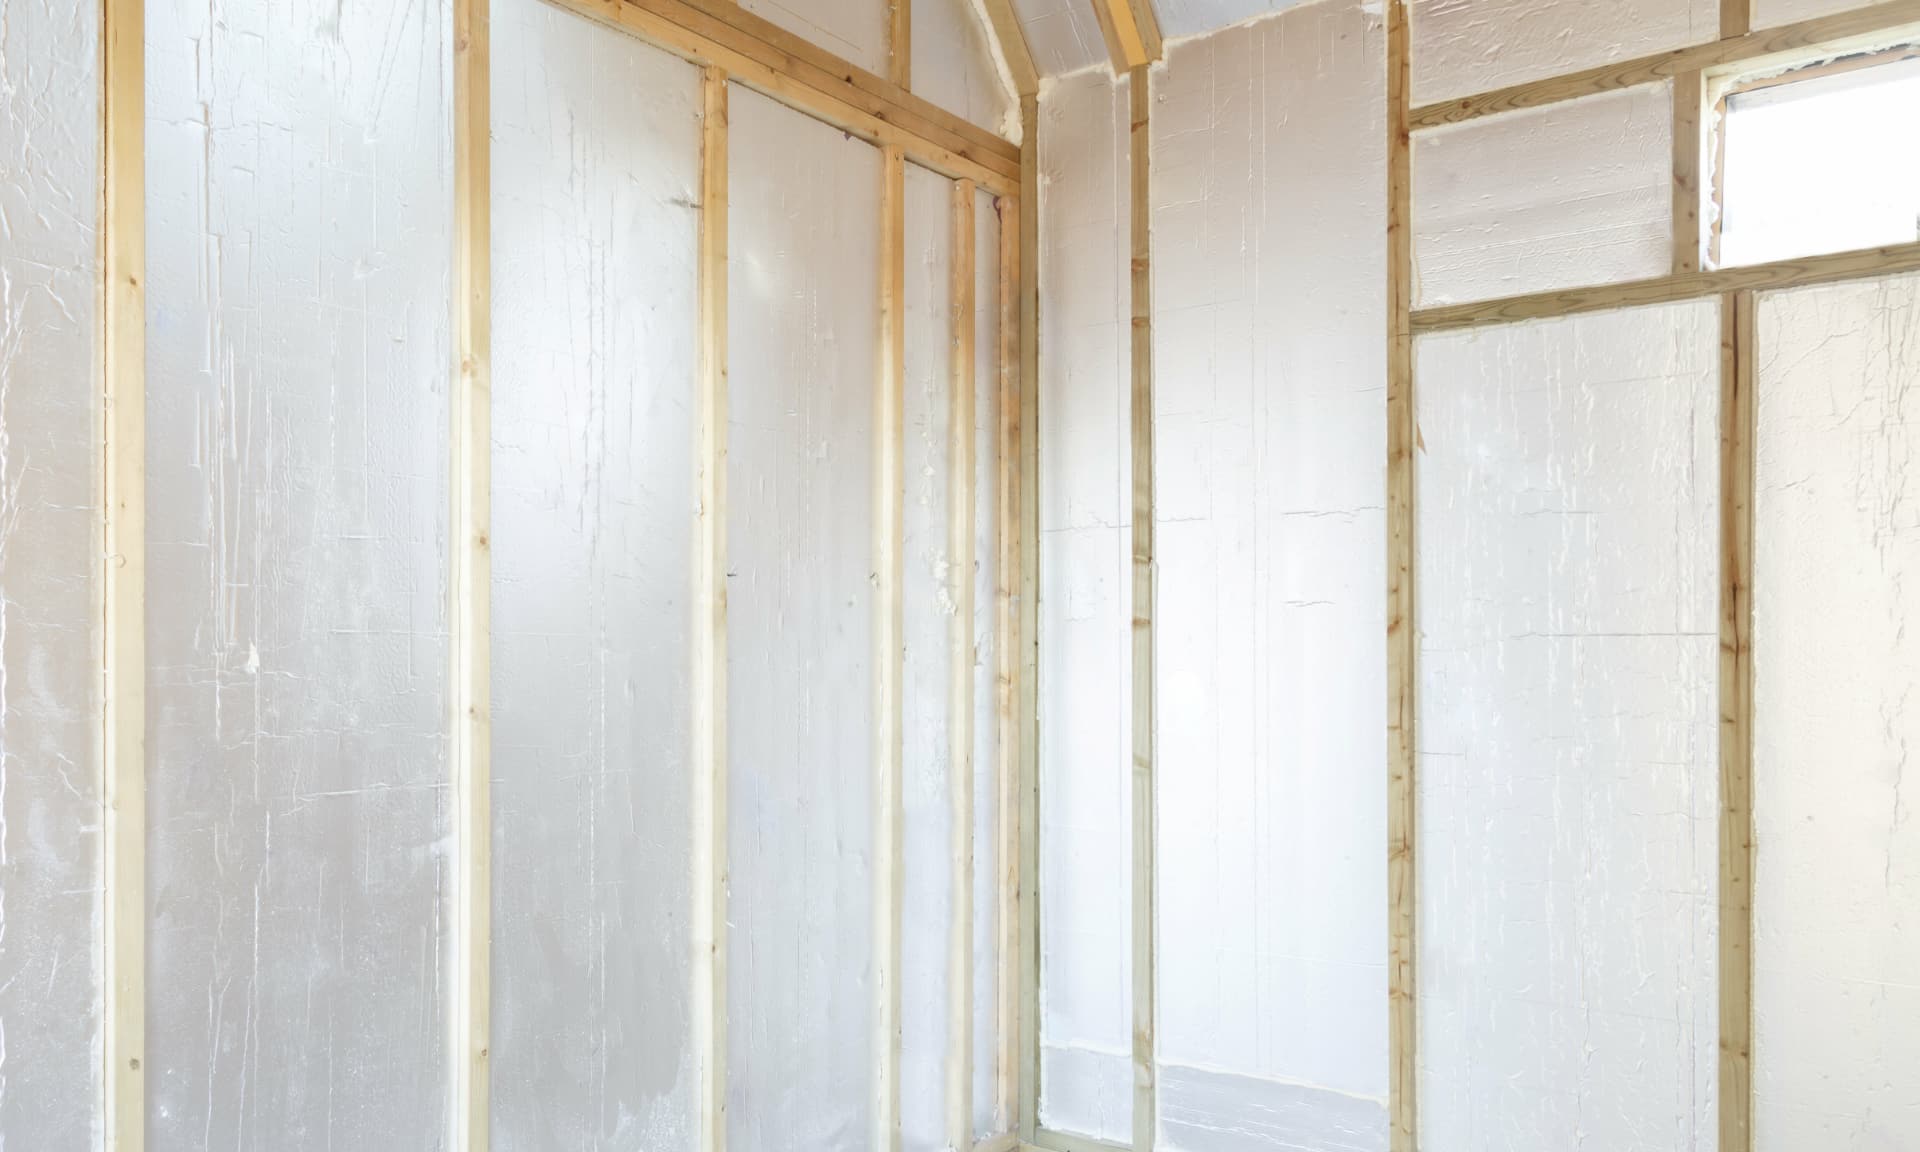 Foil-faced PIR insulation in a garden room wall